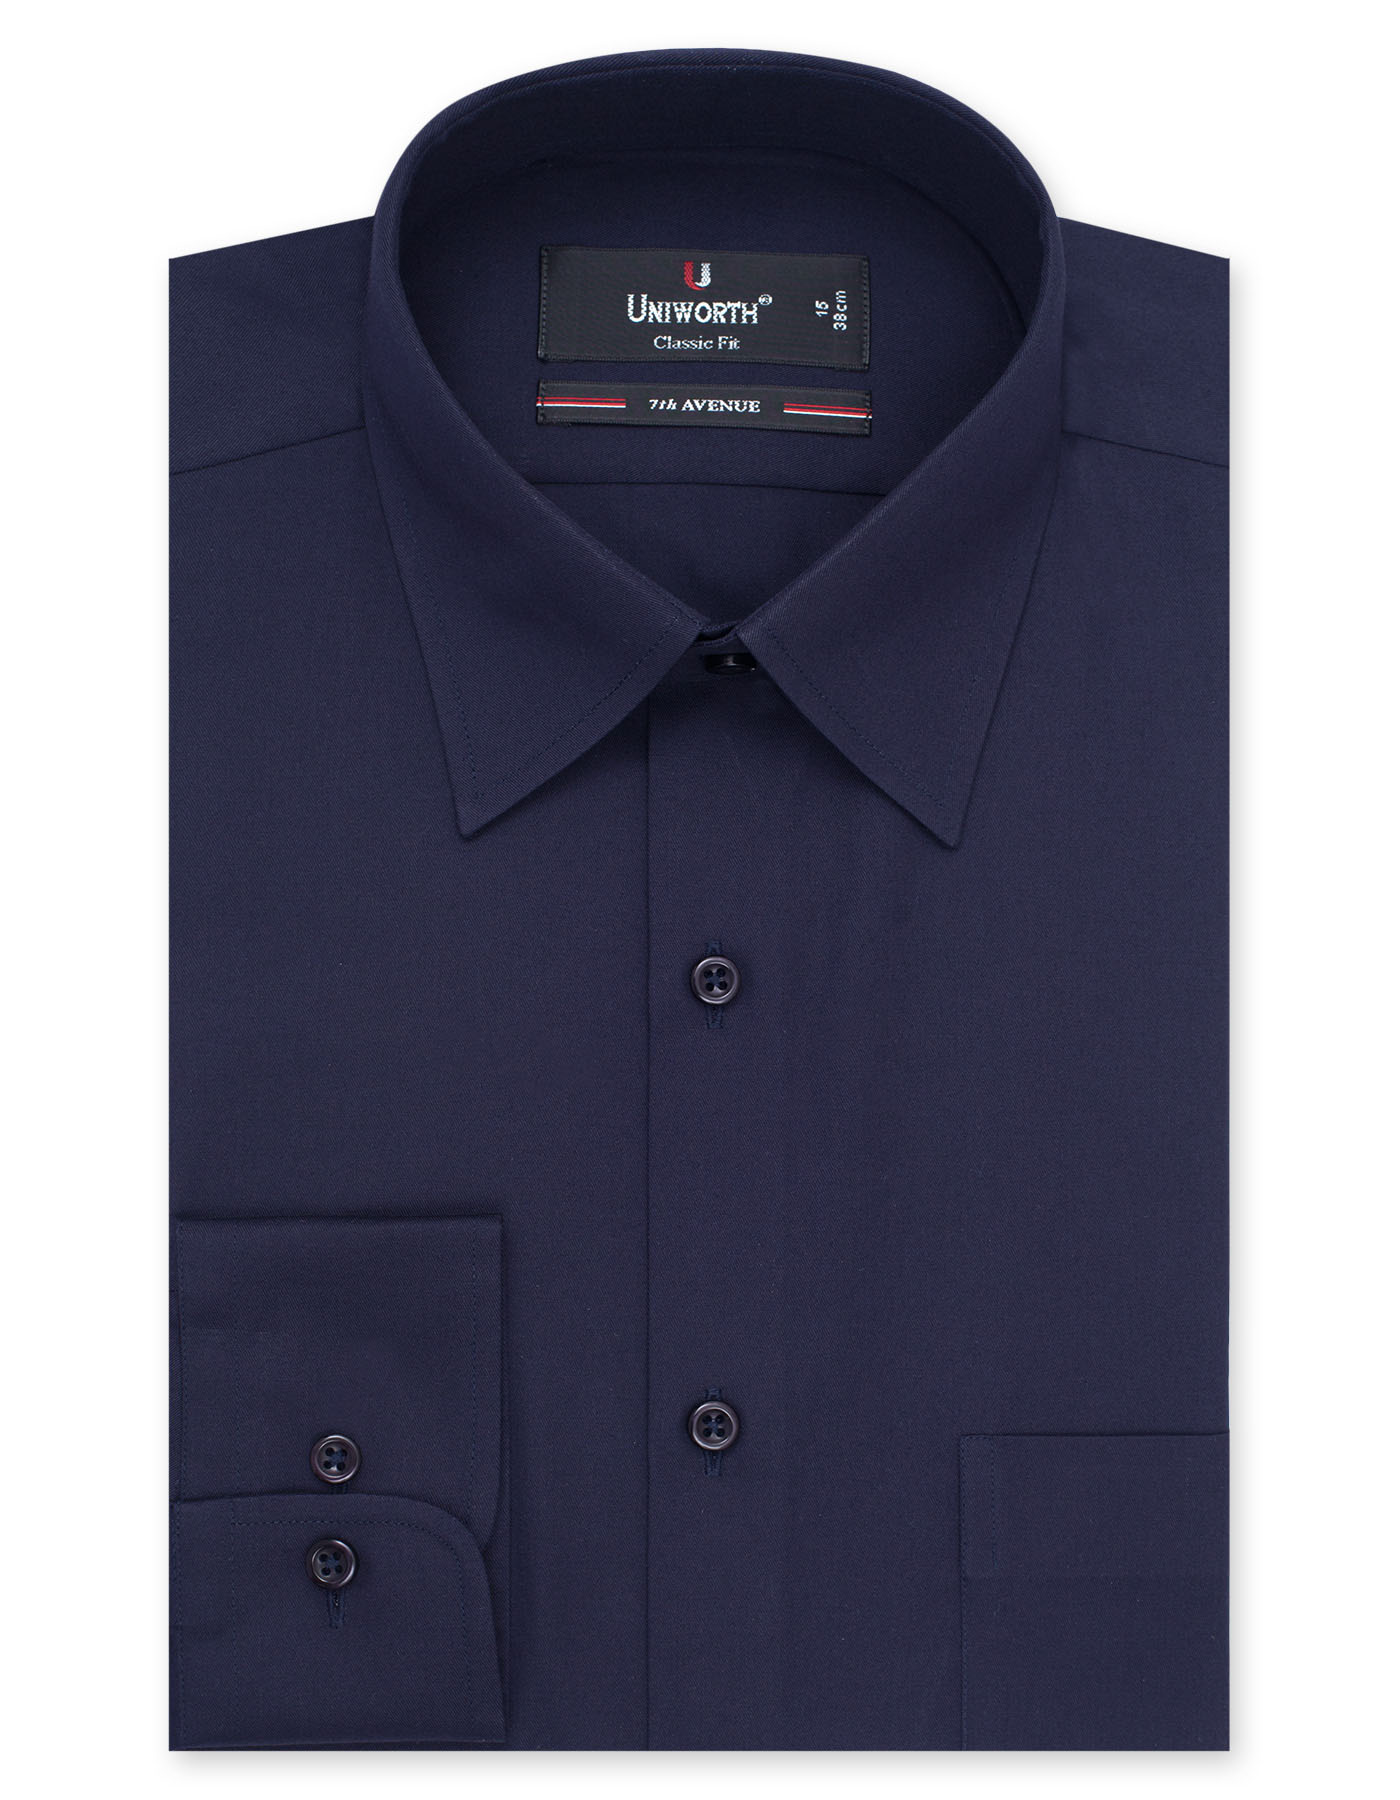 Navy Blue Plain Classic Fit Dress Shirt